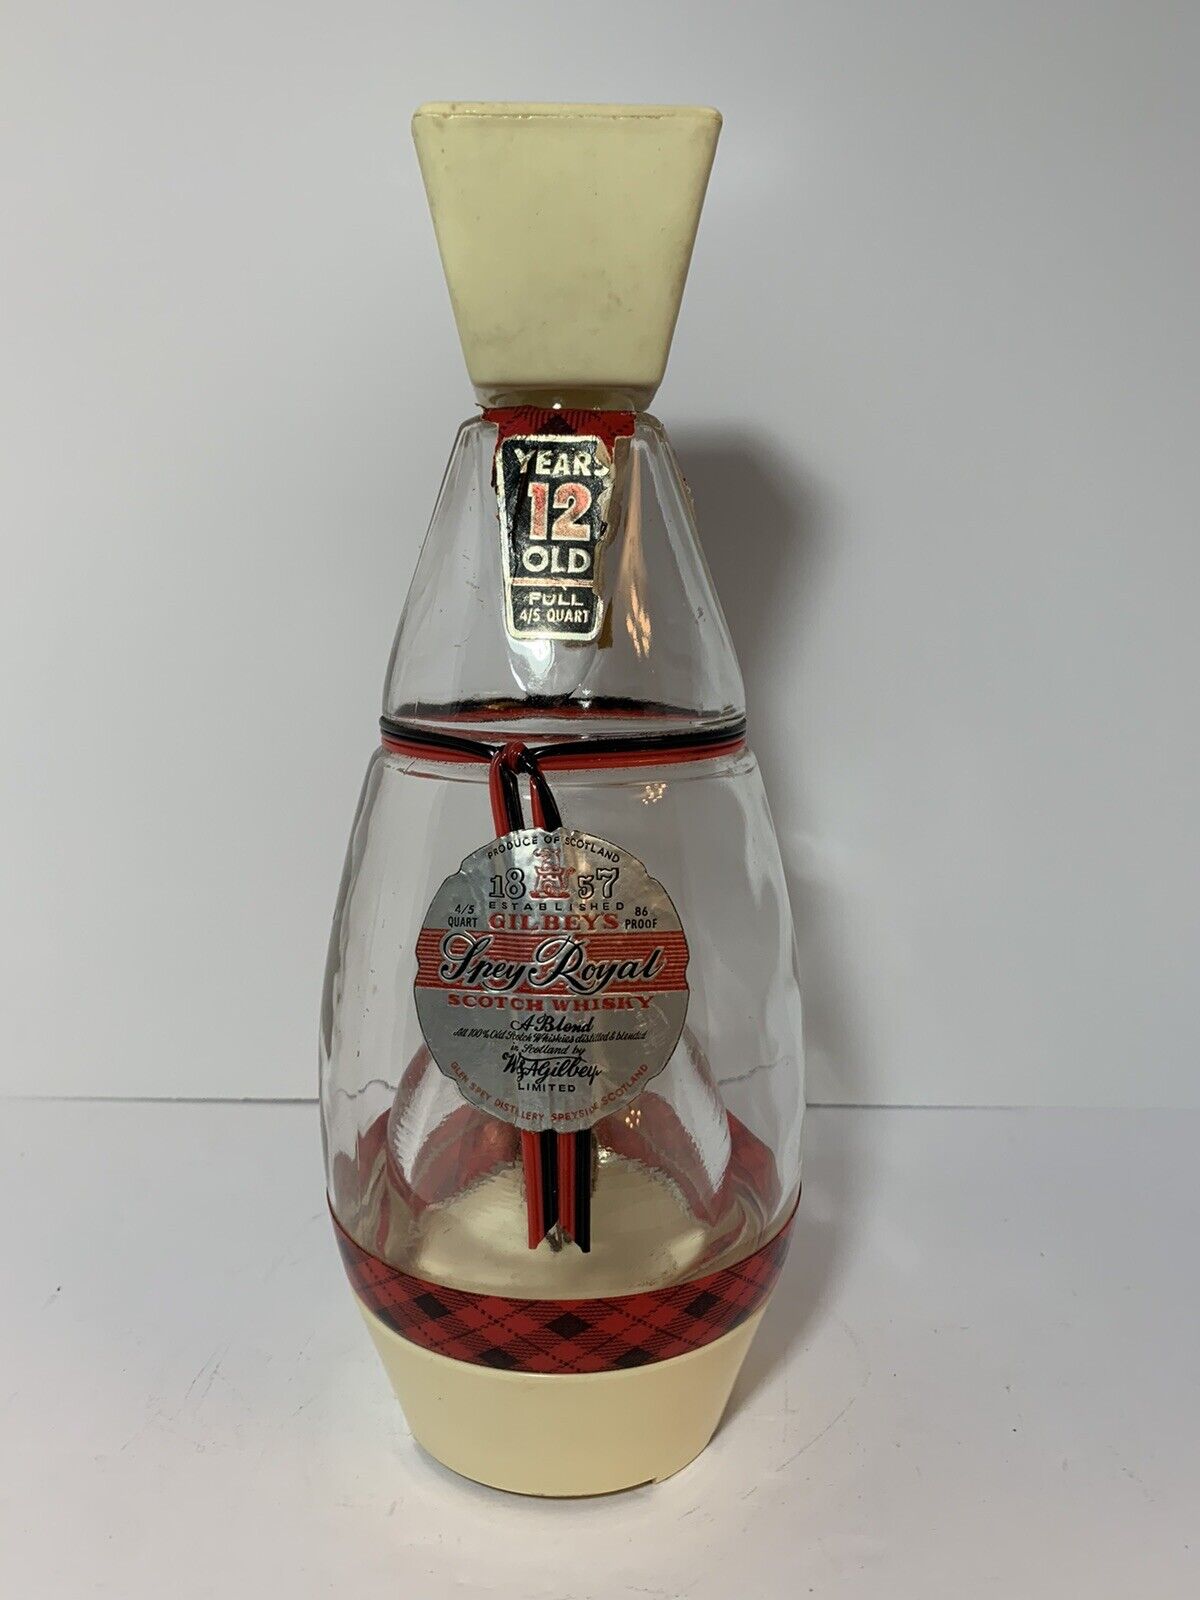 Vintage Gilbeys Spey Royal Scotch Whisky Bottle Decanter Music Box w/DANCER TSTD